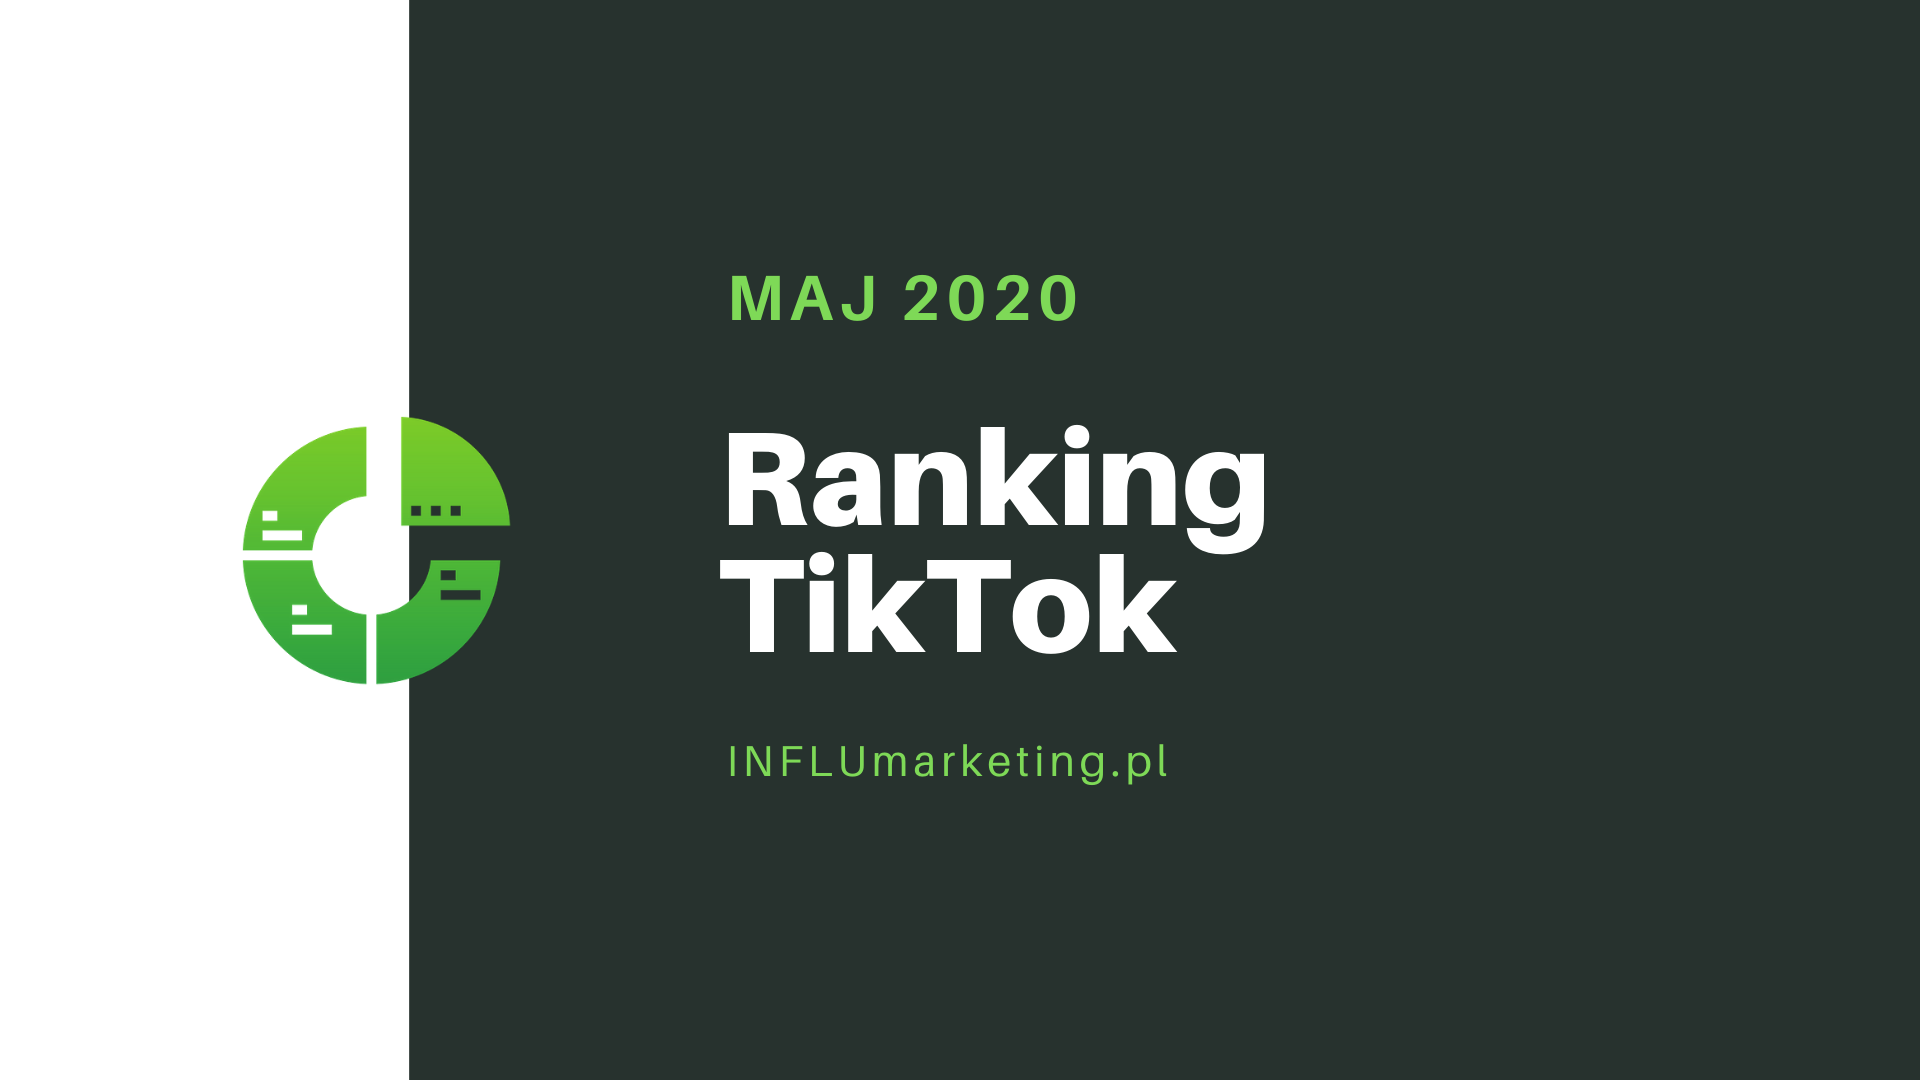 ranking tiktok polska 2020 cover photo maj